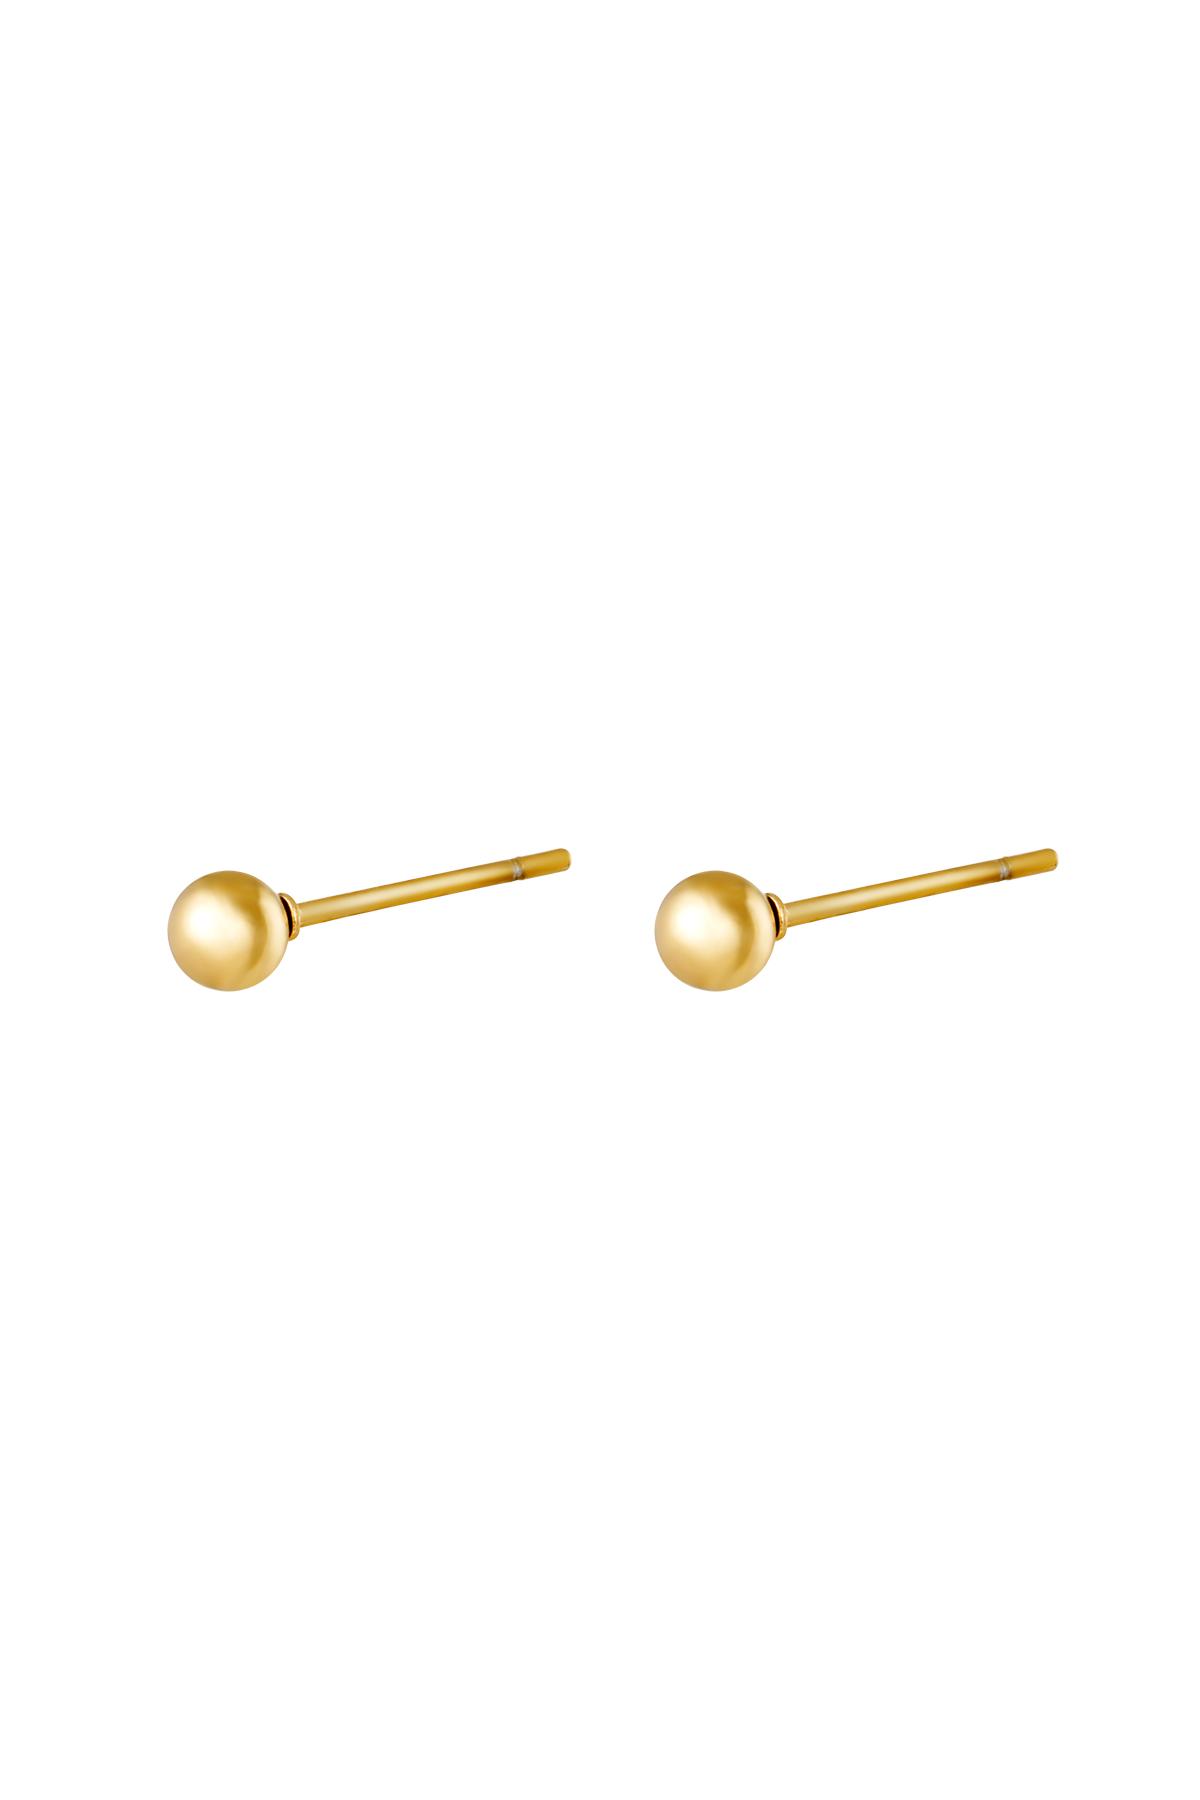 Gold / Earrings Big Dot Gold Stainless Steel 